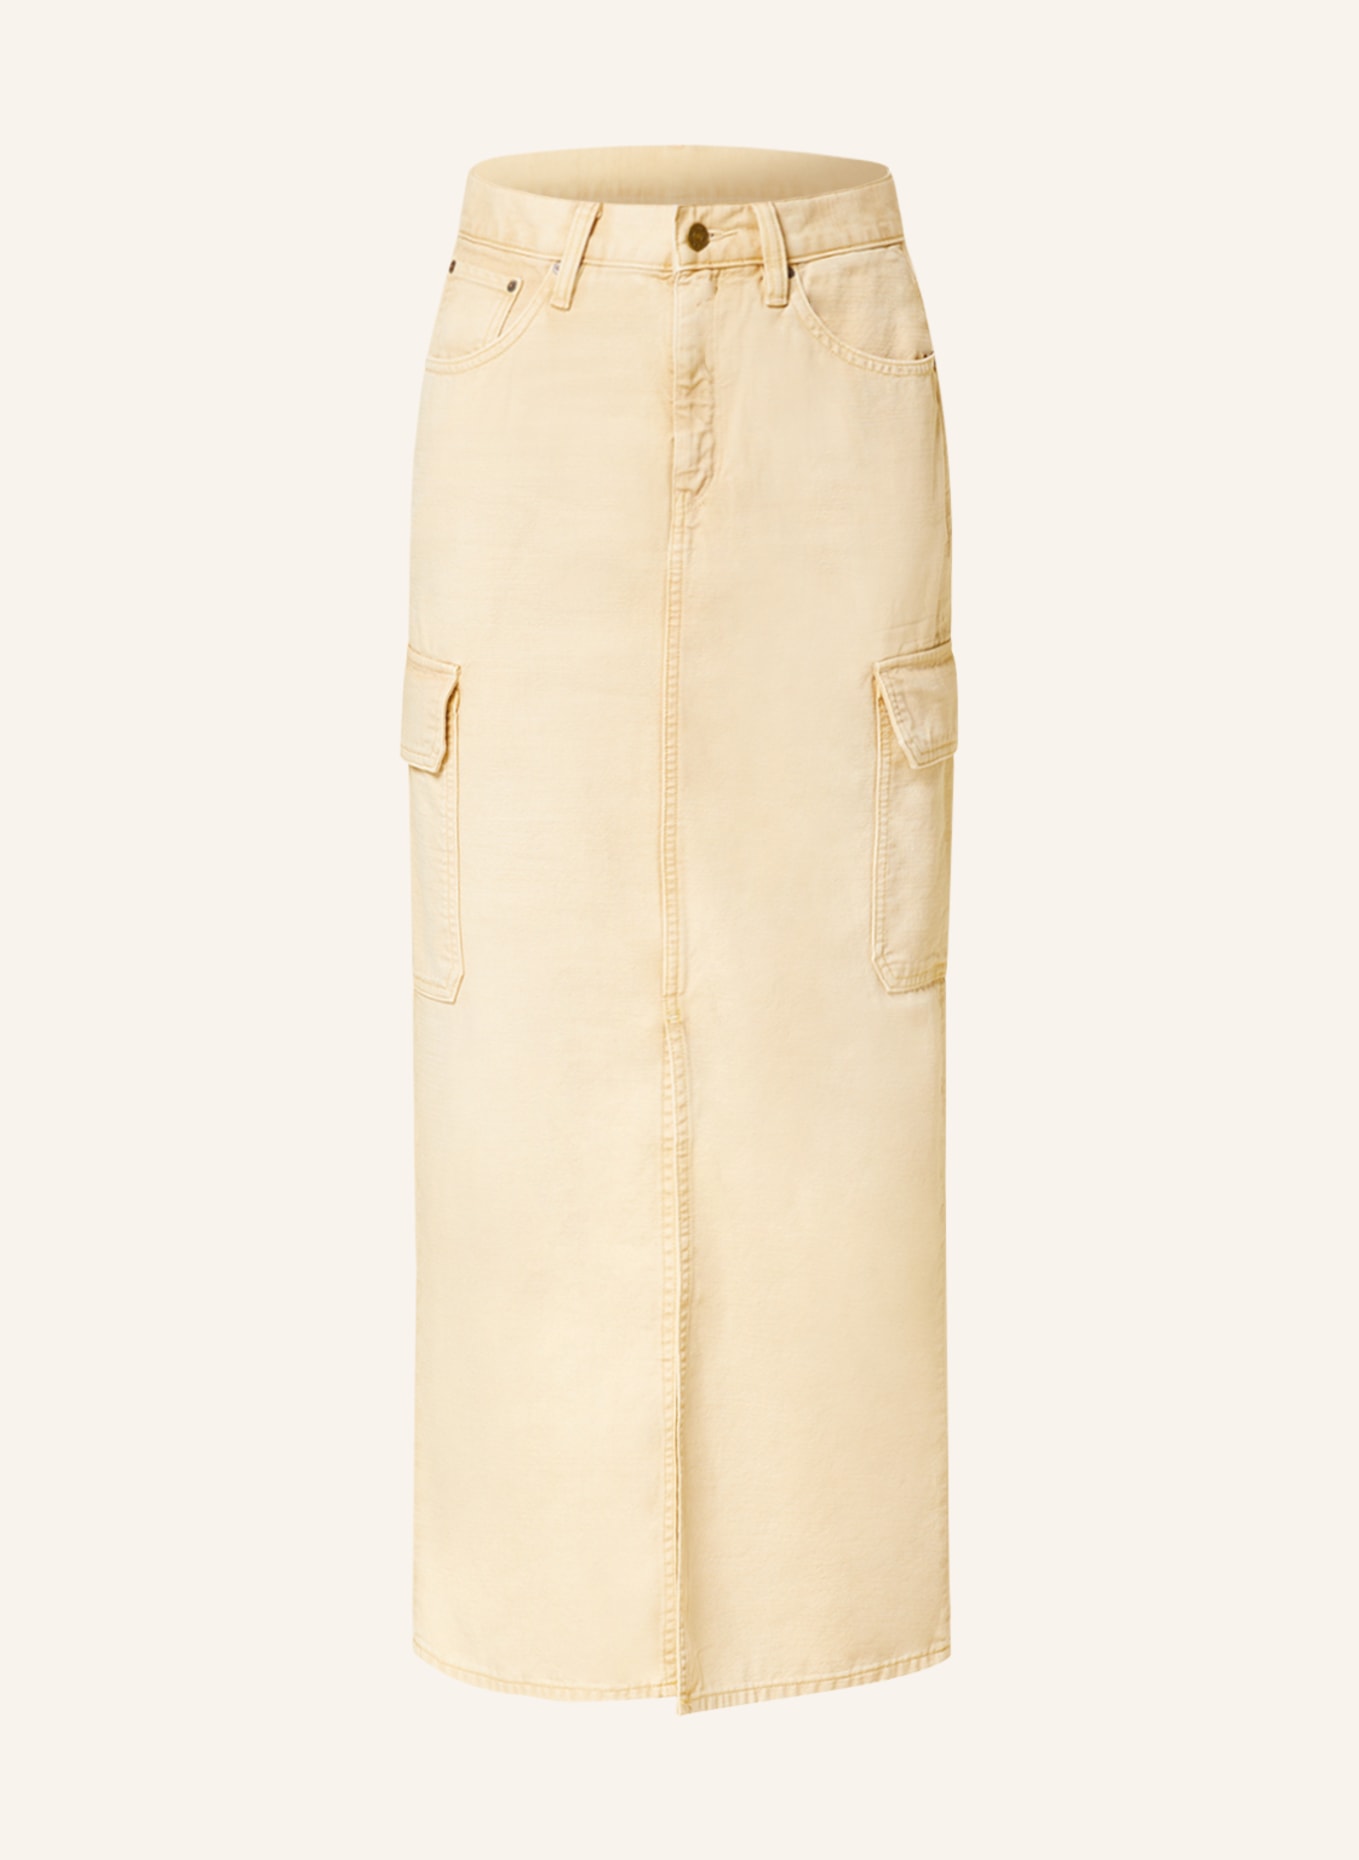 G-Star RAW Denim skirt VIKTORIA, Color: G553 sun faded sand gd (Image 1)